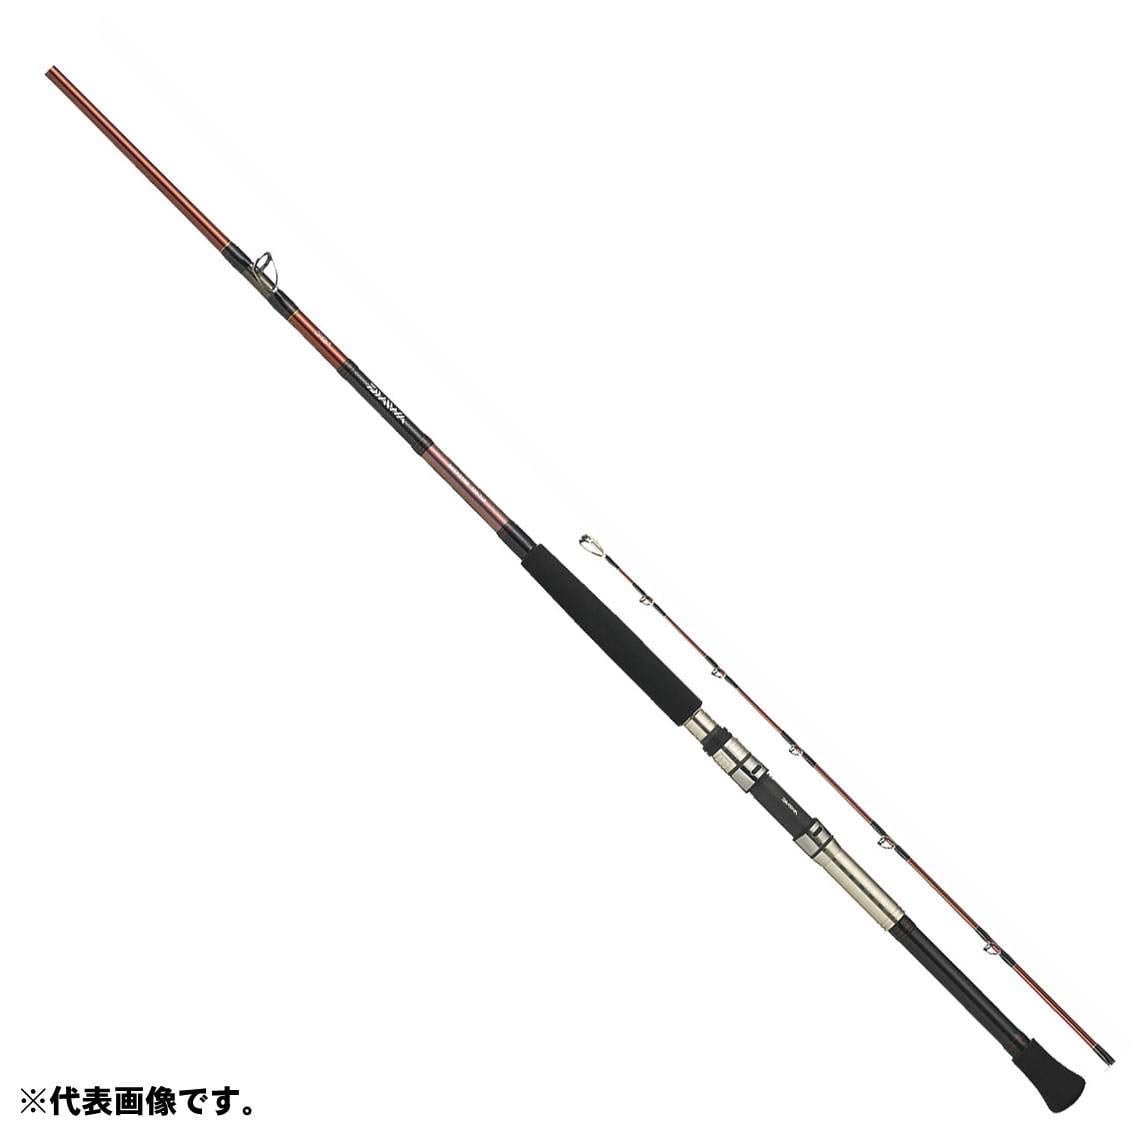 Daiwa (Daiwa) Deep Zone 73 Tone 150-180 Fishing rod